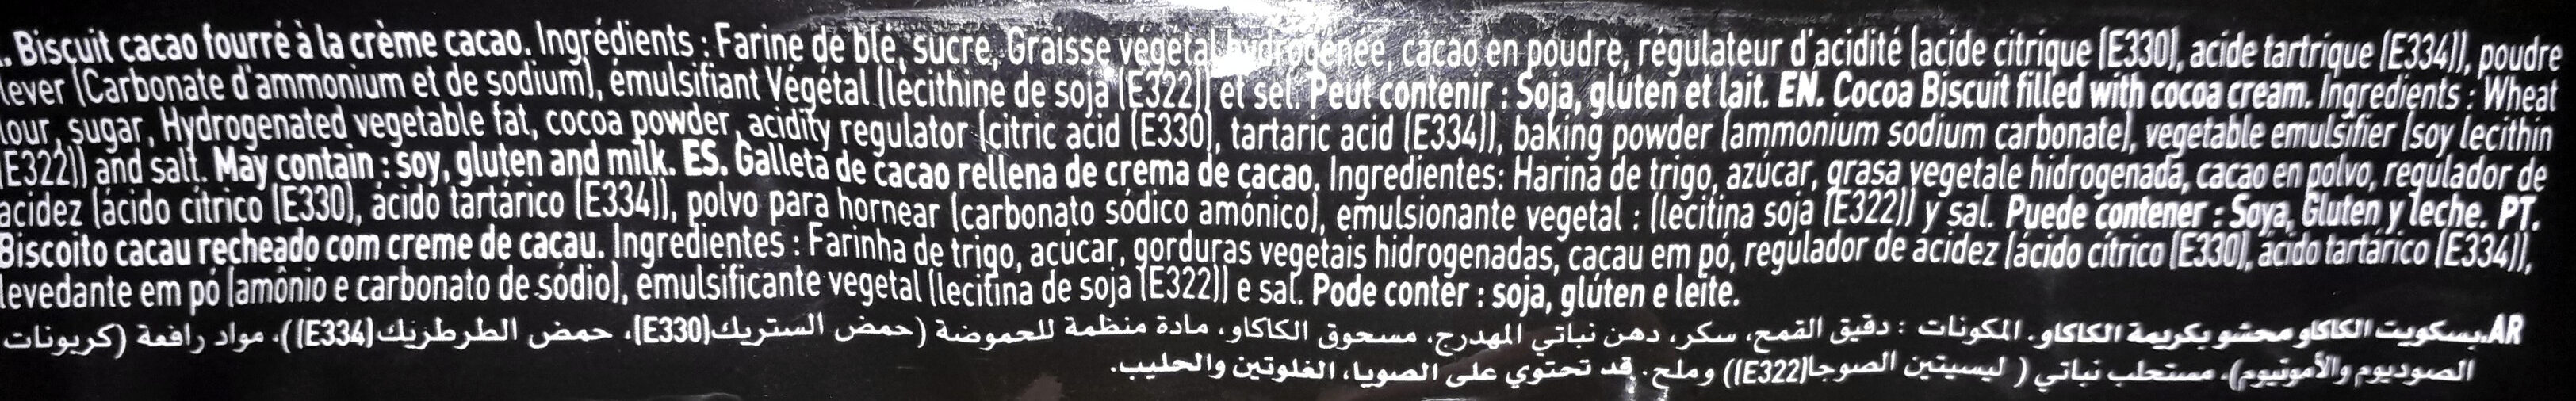 Momo black - Ingredients - fr